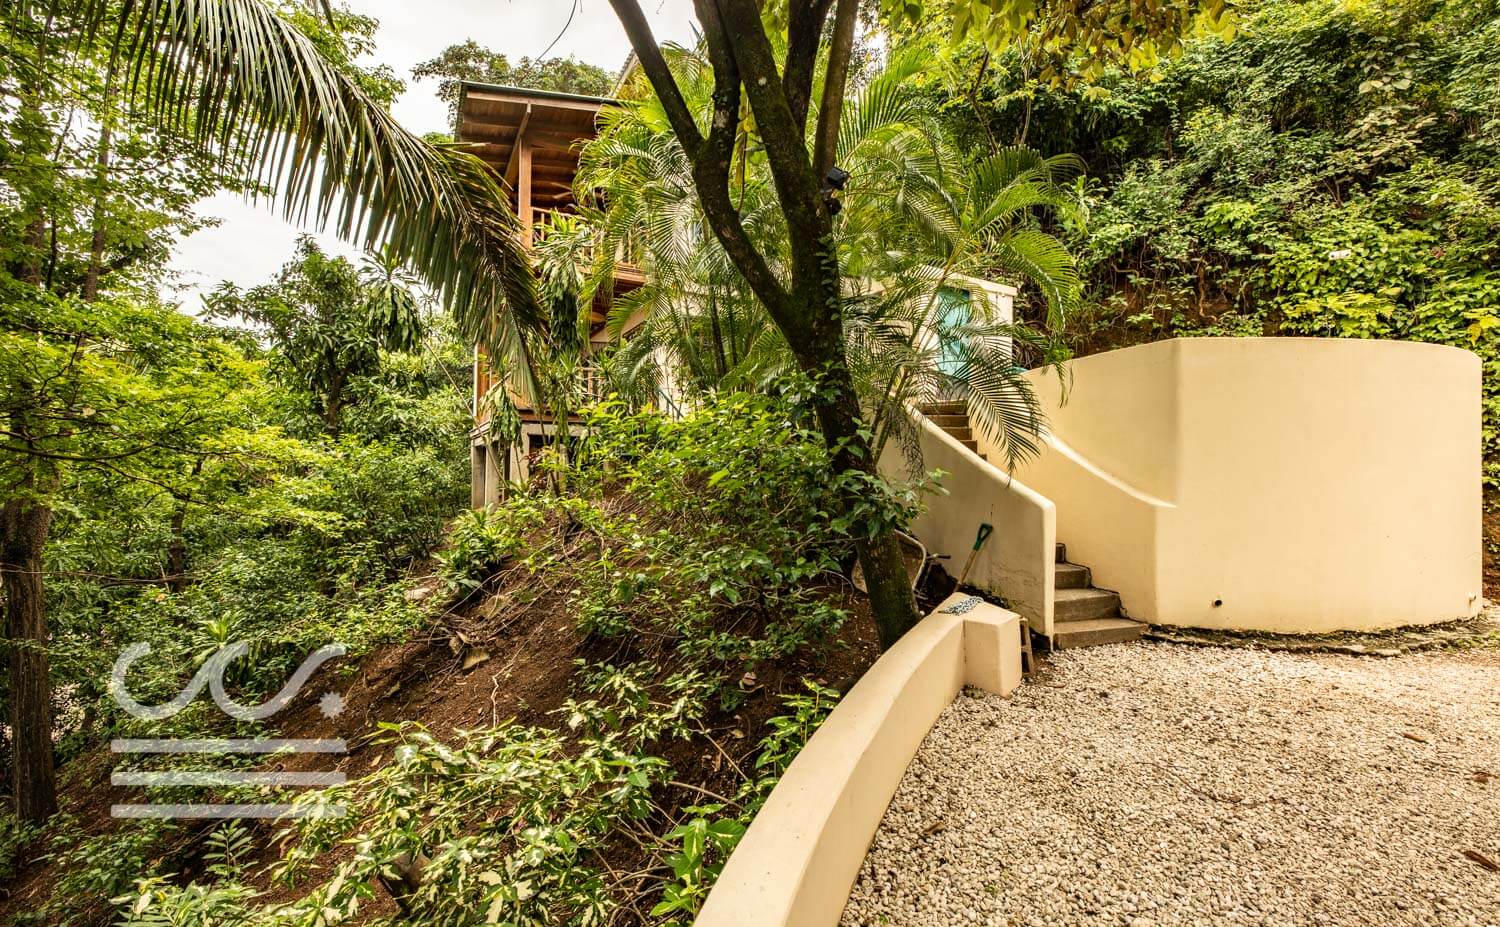 Casa-Ladera-Wanderlust-Realty-Real-Estate-Retals-Nosara-Costa-Rica-15.jpg